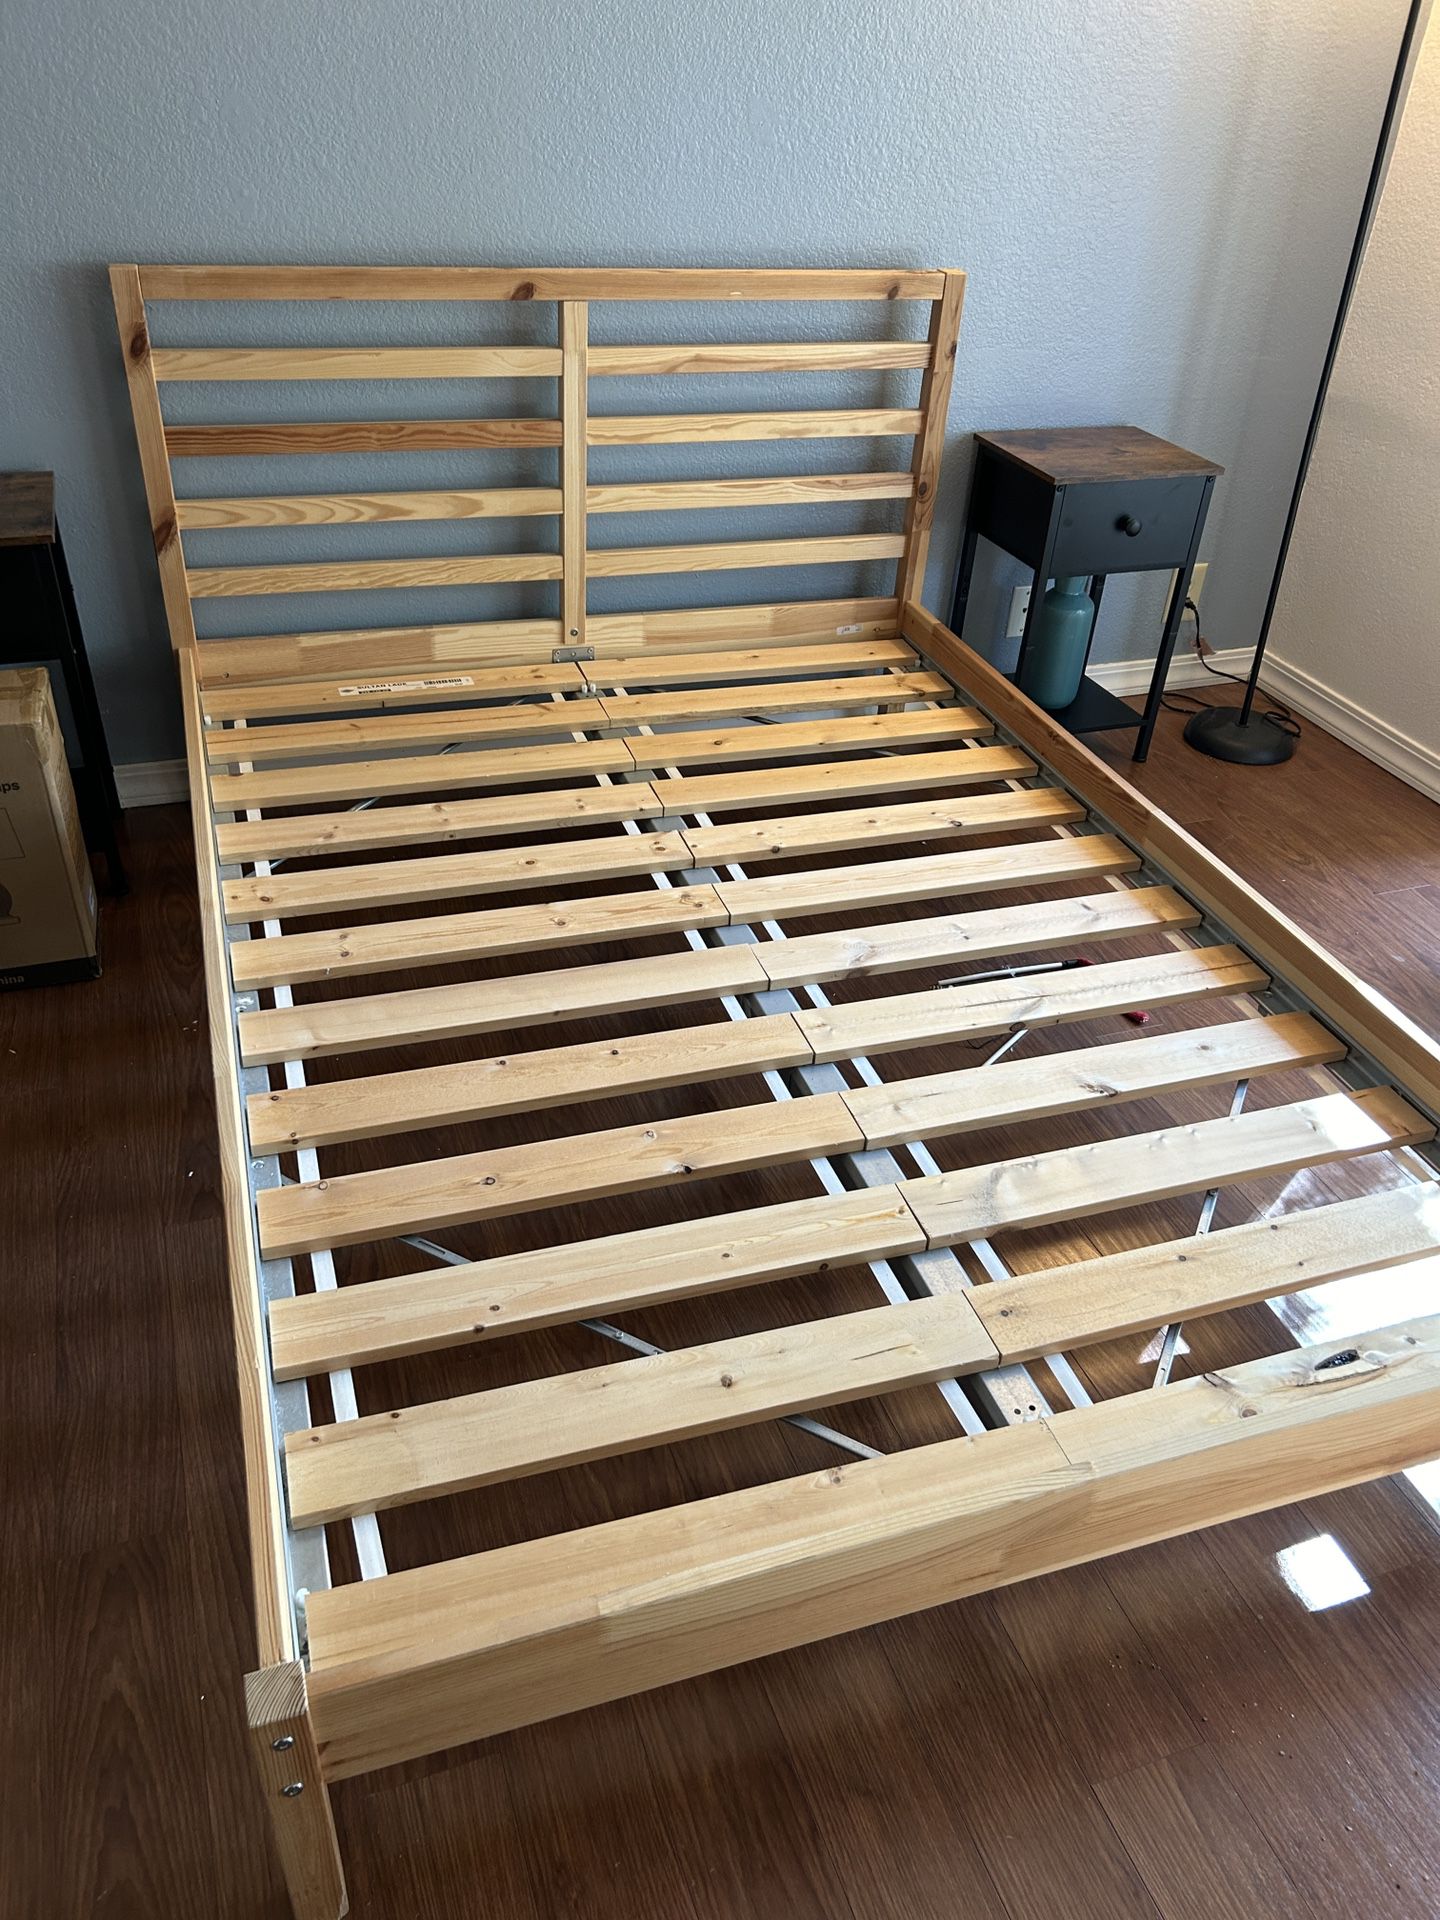 Wood Bed Frame - Full Size